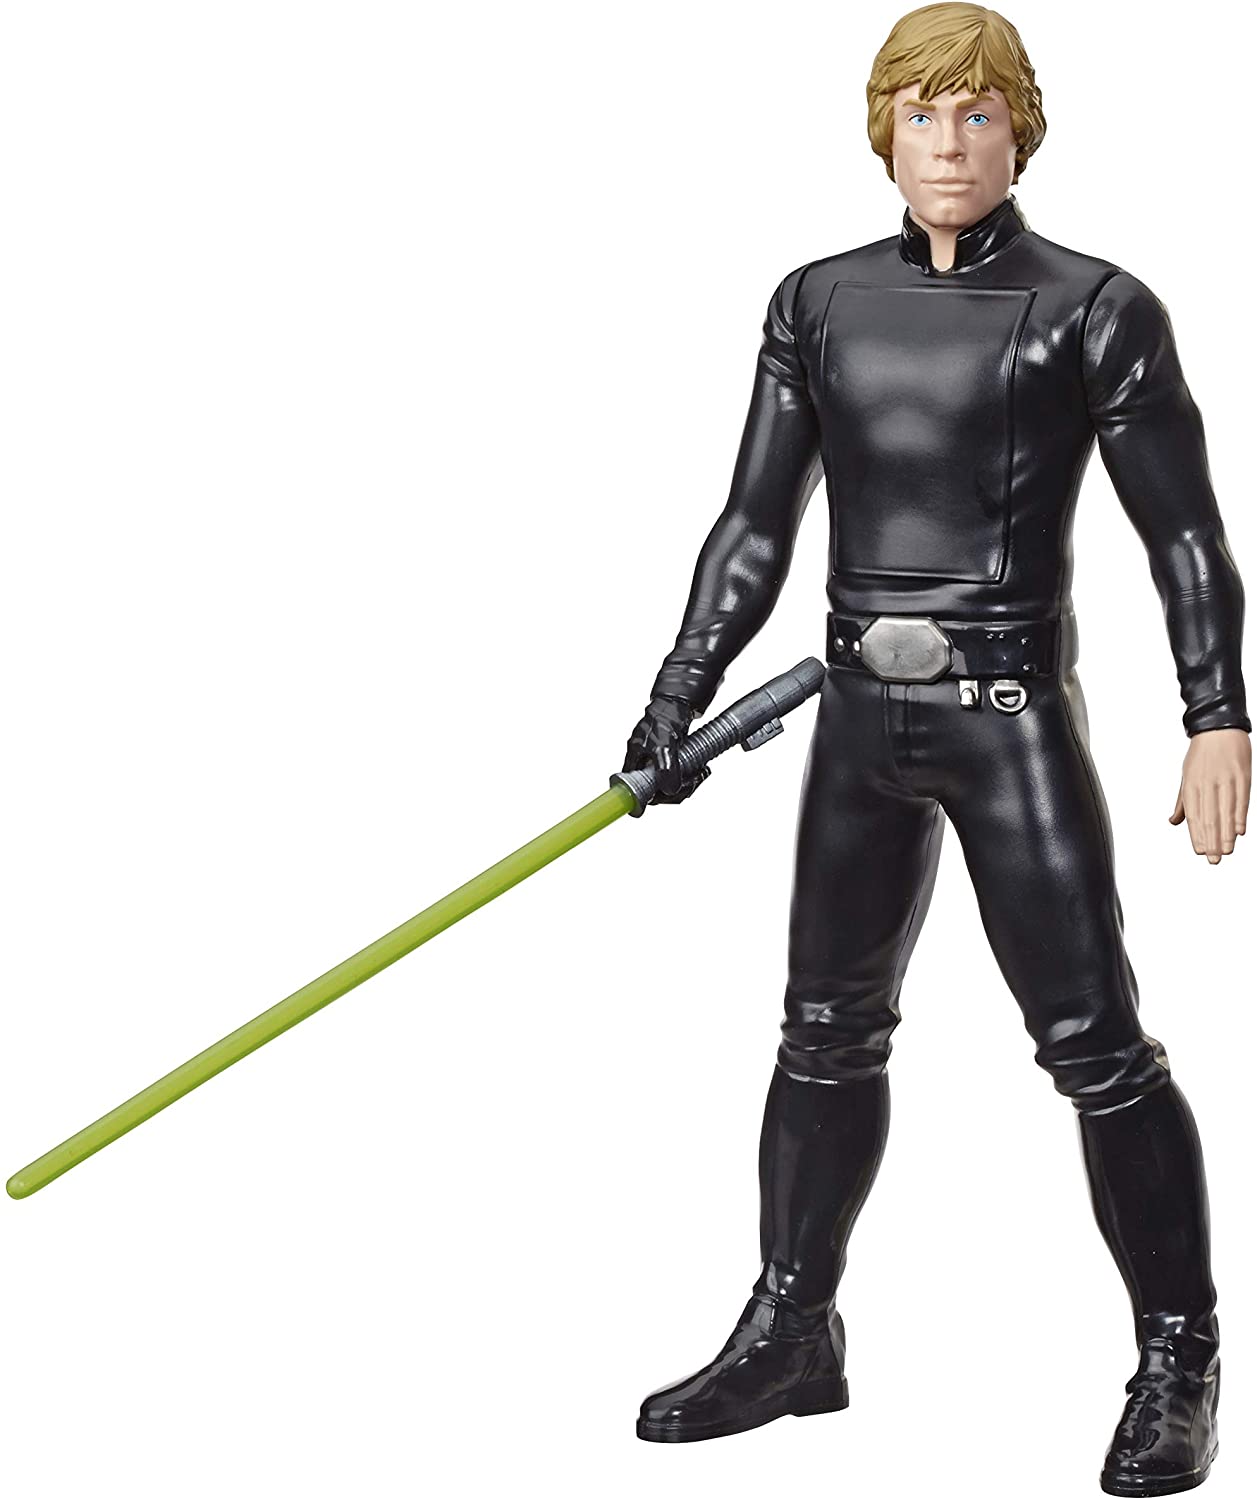 Star Wars Luke Skywalker - 9.5" Deluxe Olympus Action Figure